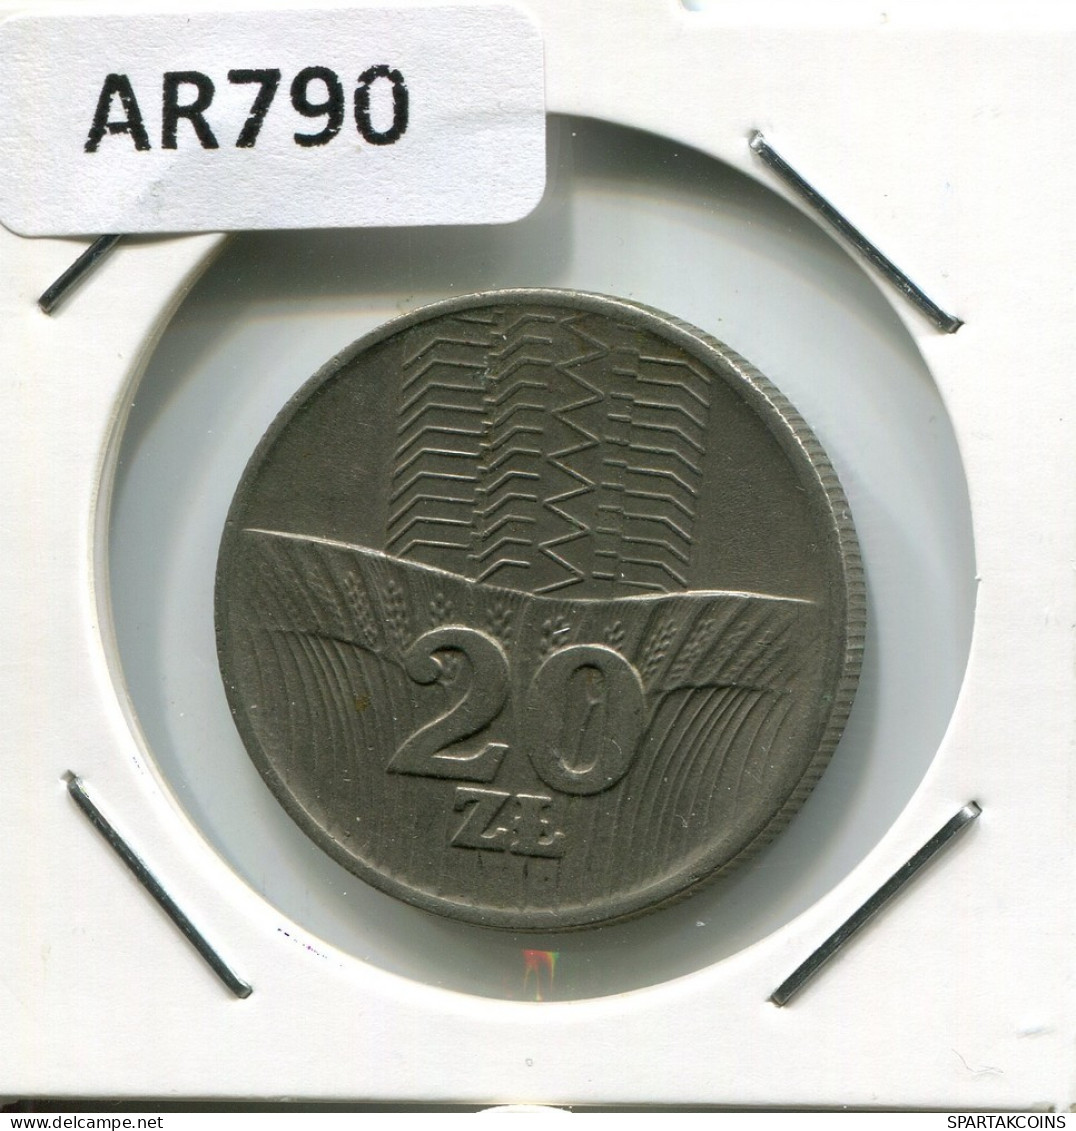 20 ZLOTE 1976 POLONIA POLAND Moneda #AR790.E.A - Polonia